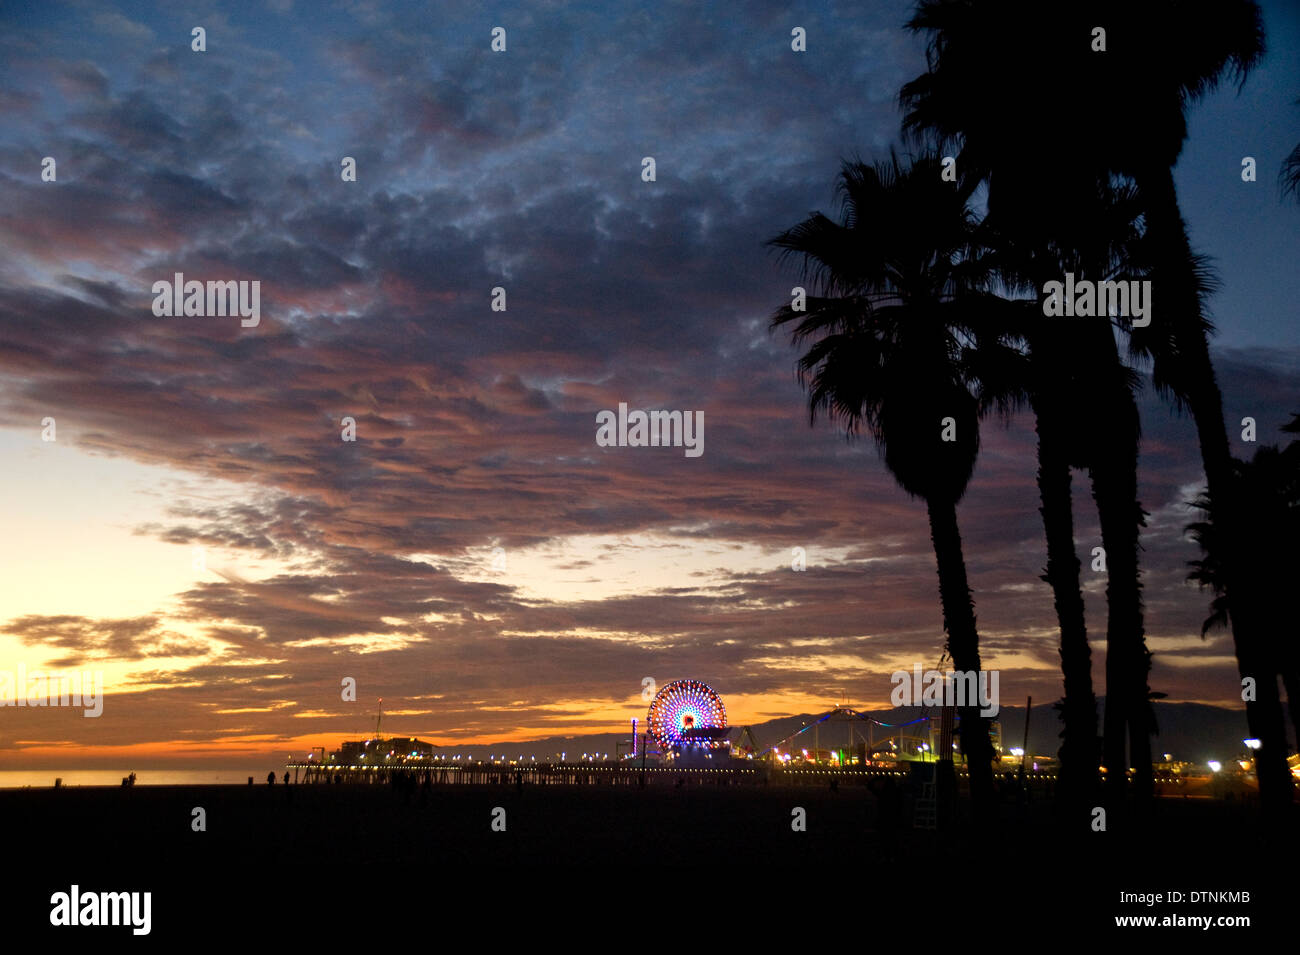 The Santa Monica Pier and Amusement Park at sunset Stock Photo